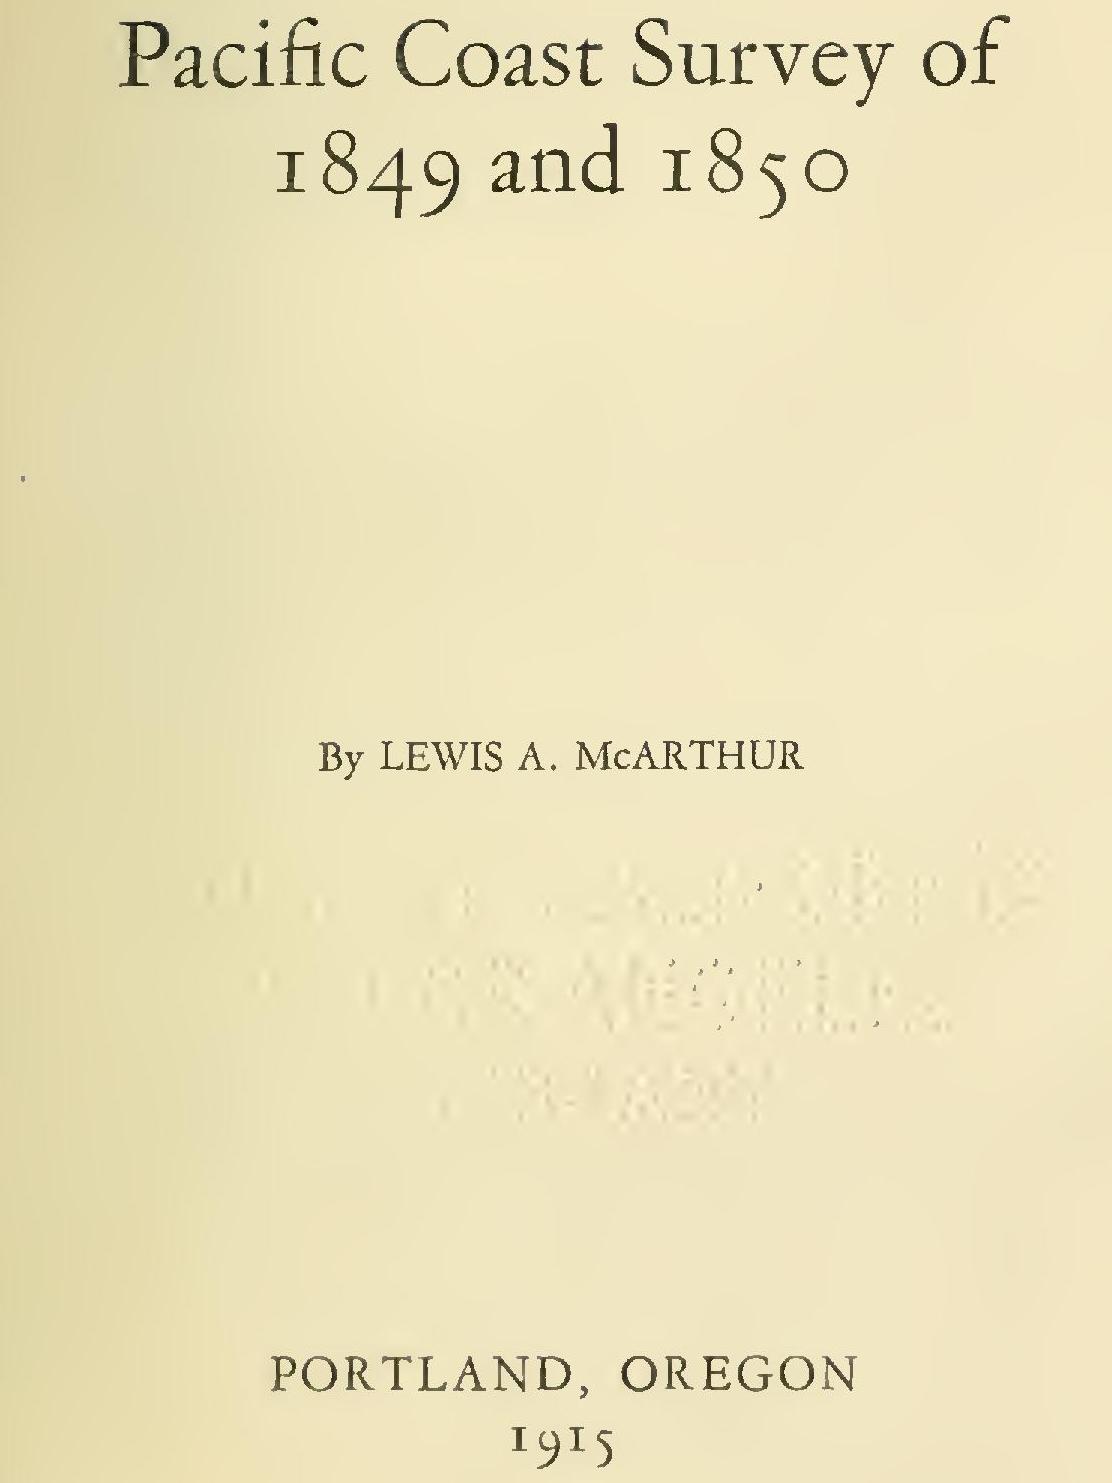 File:Title page, Lewis A. McArthur